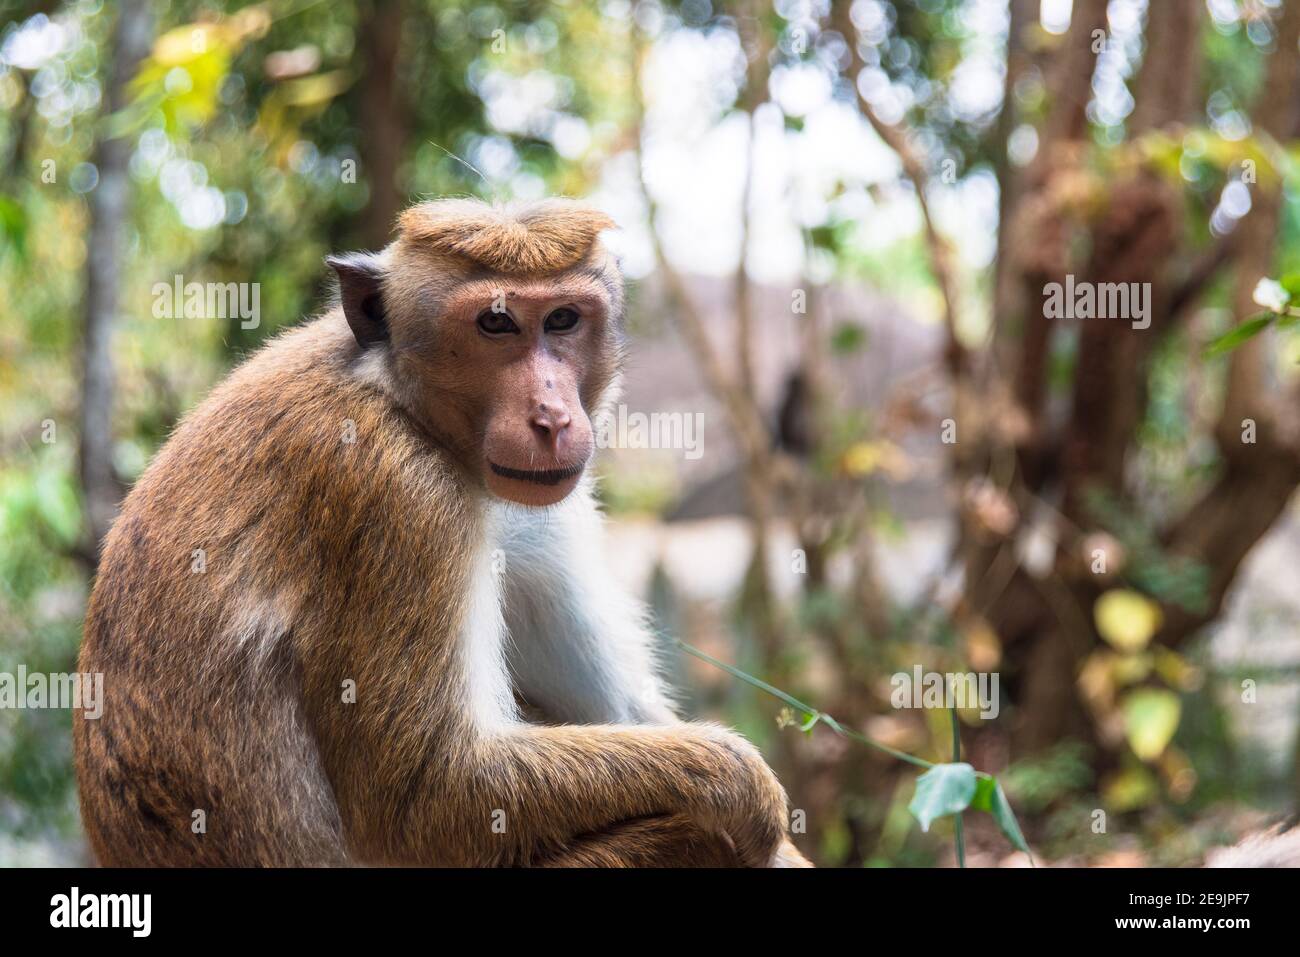 Macaca sinica, Toque macaque Monkey of Sri Lanka. Looking into the camera Stock Photo